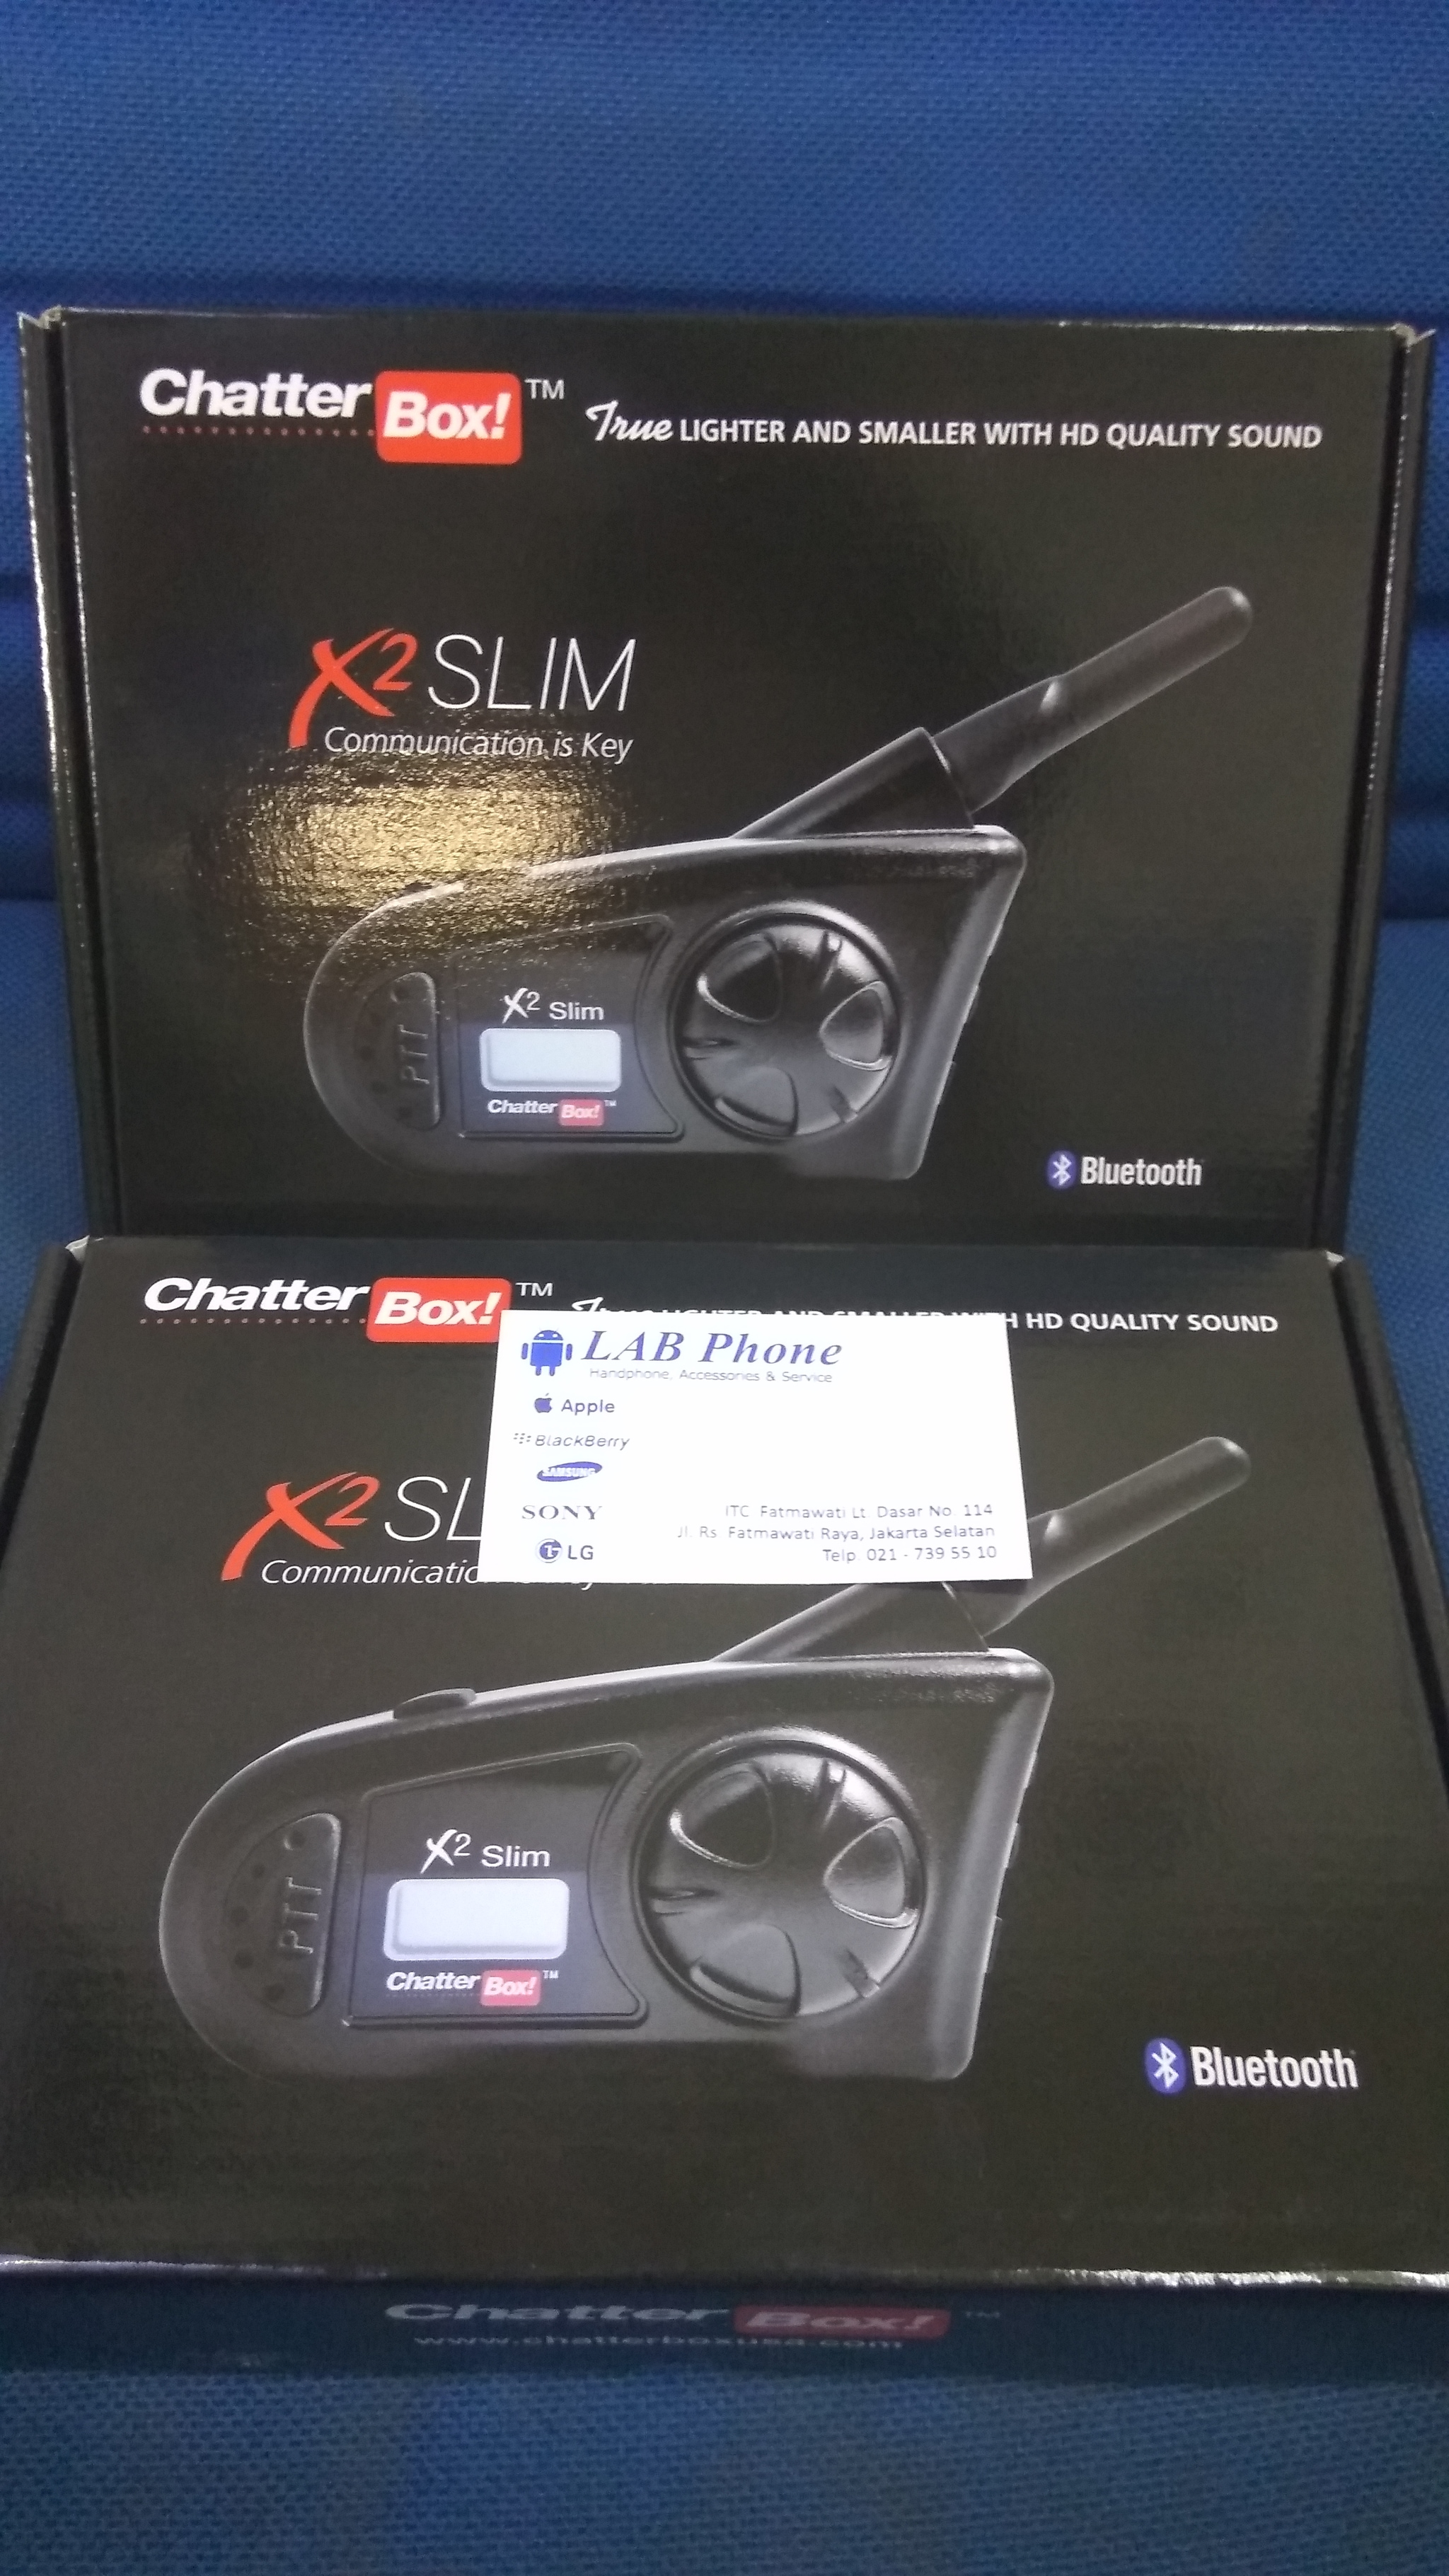 Chatterbox X2 Slim Bluetooth Aksesoris Mobil Di Carousell